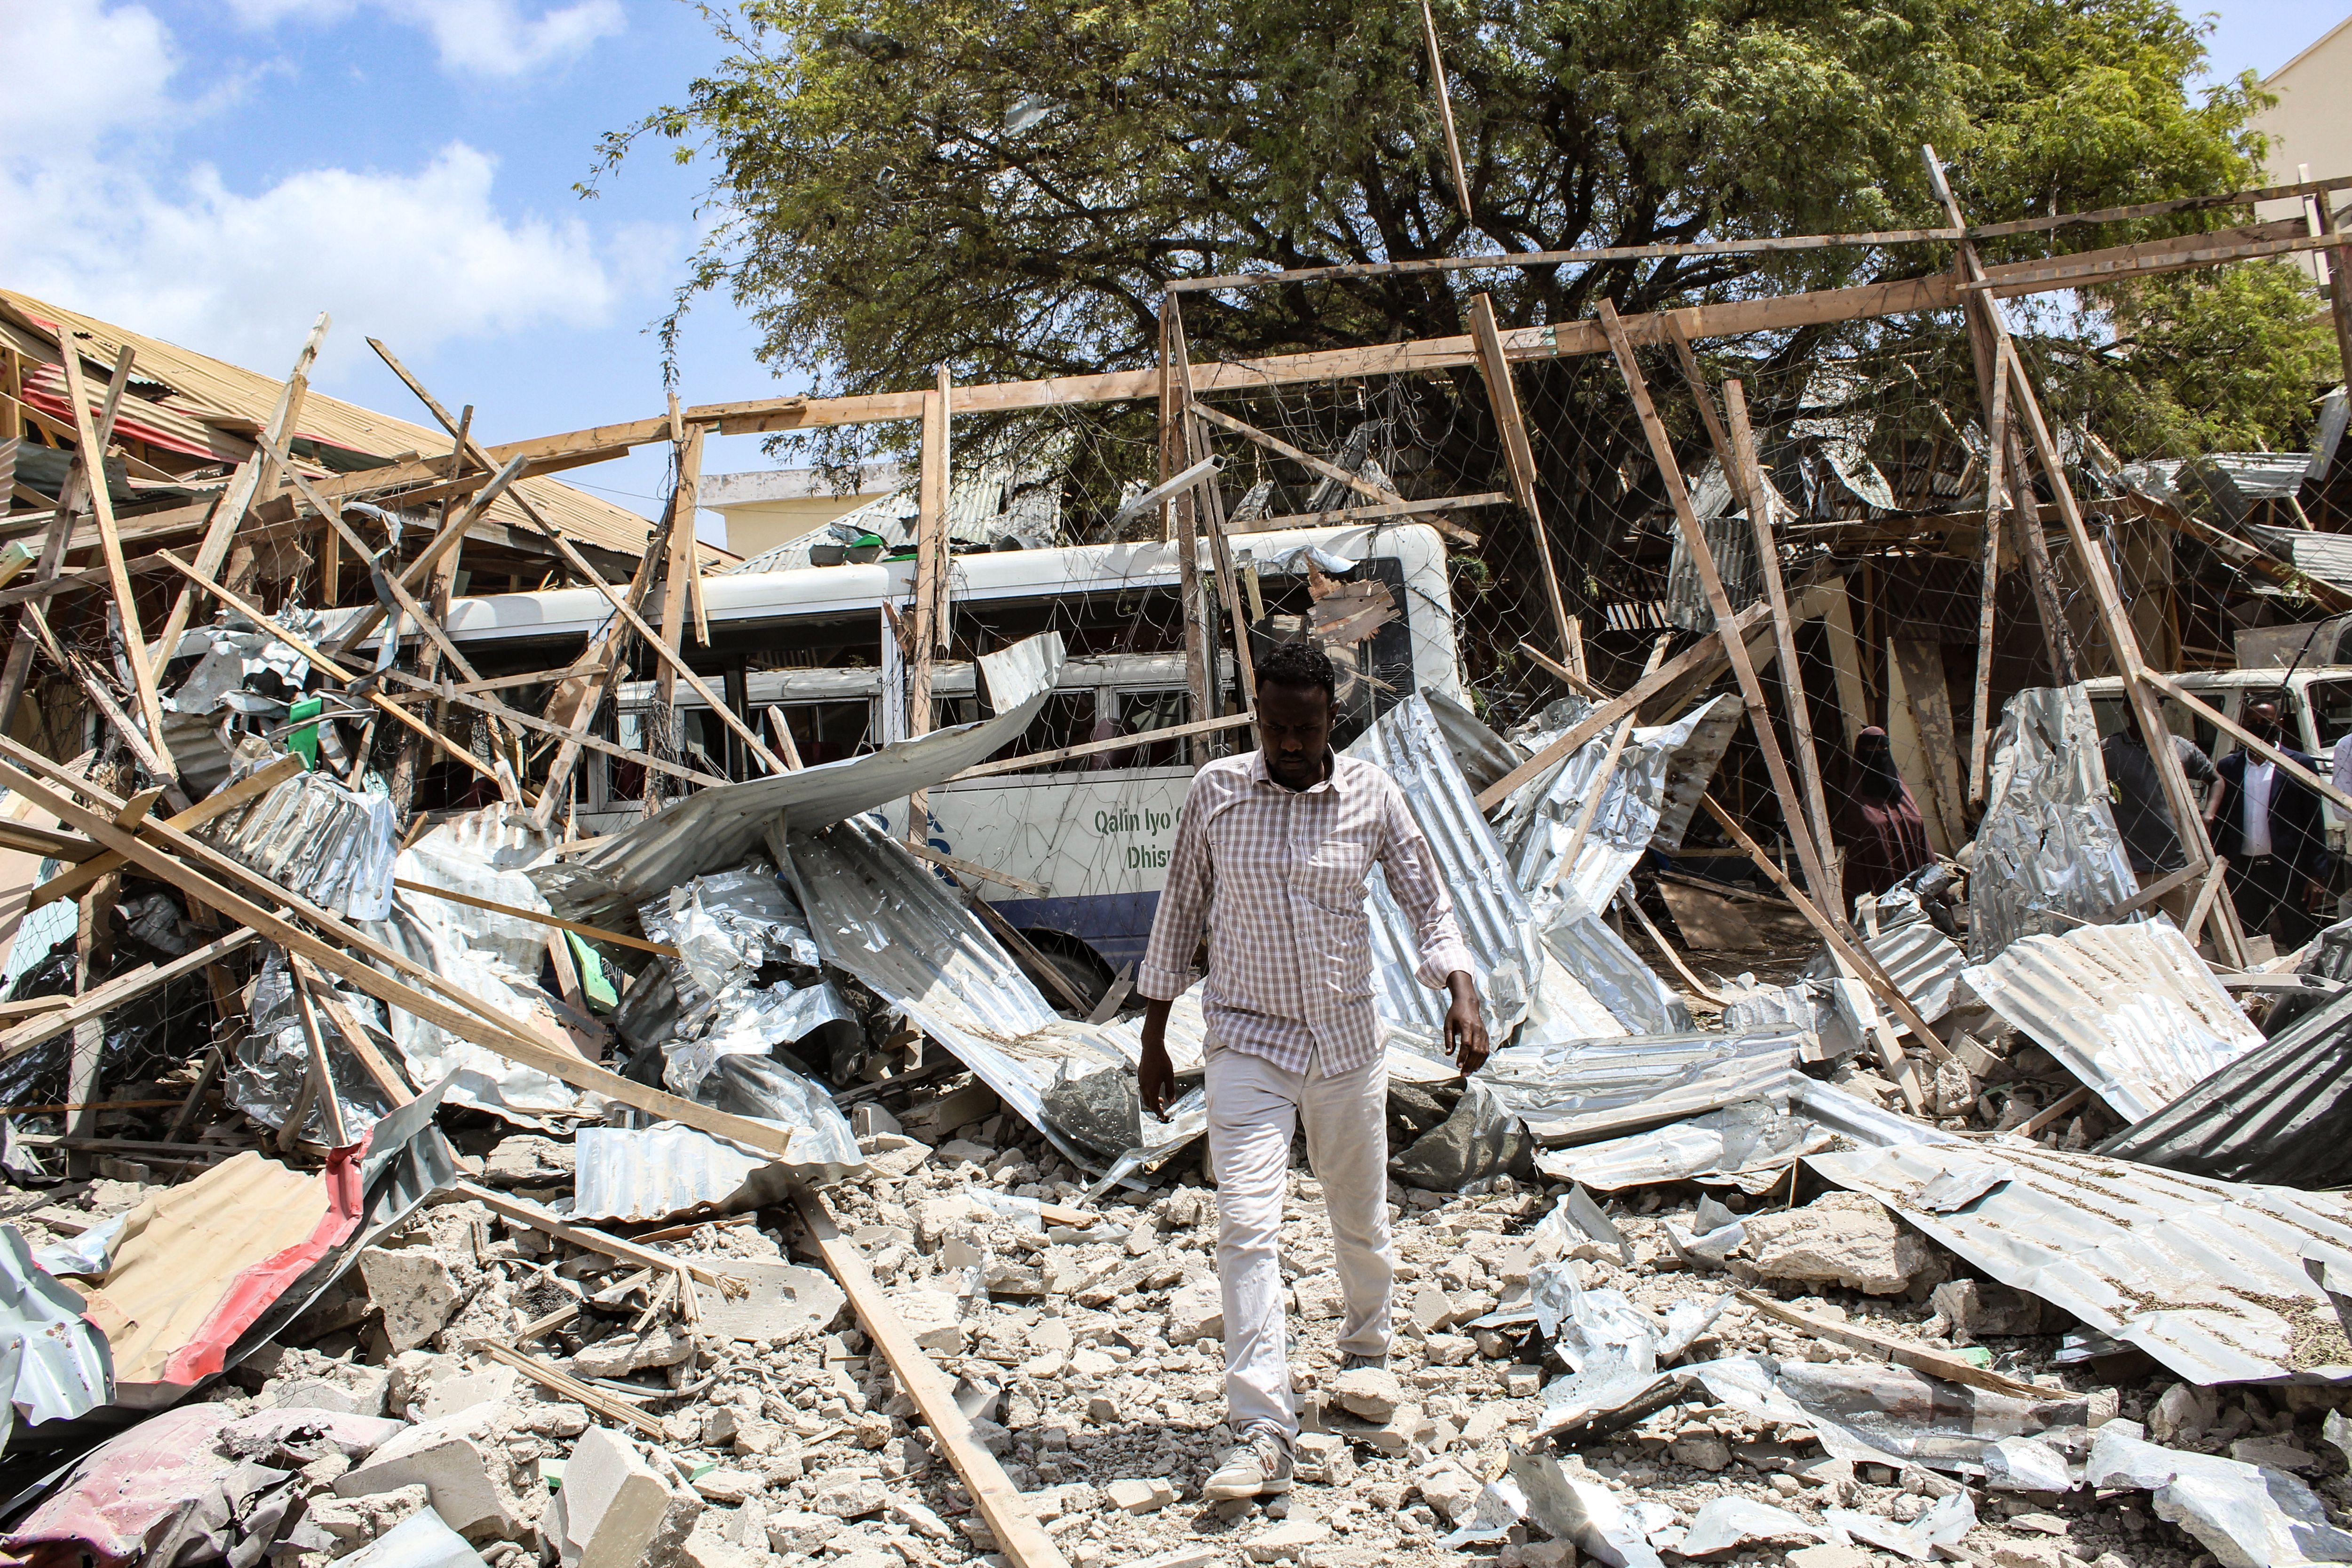 Eight people were killed in a car bombing near a school in Somalia’s capital Mogadishu